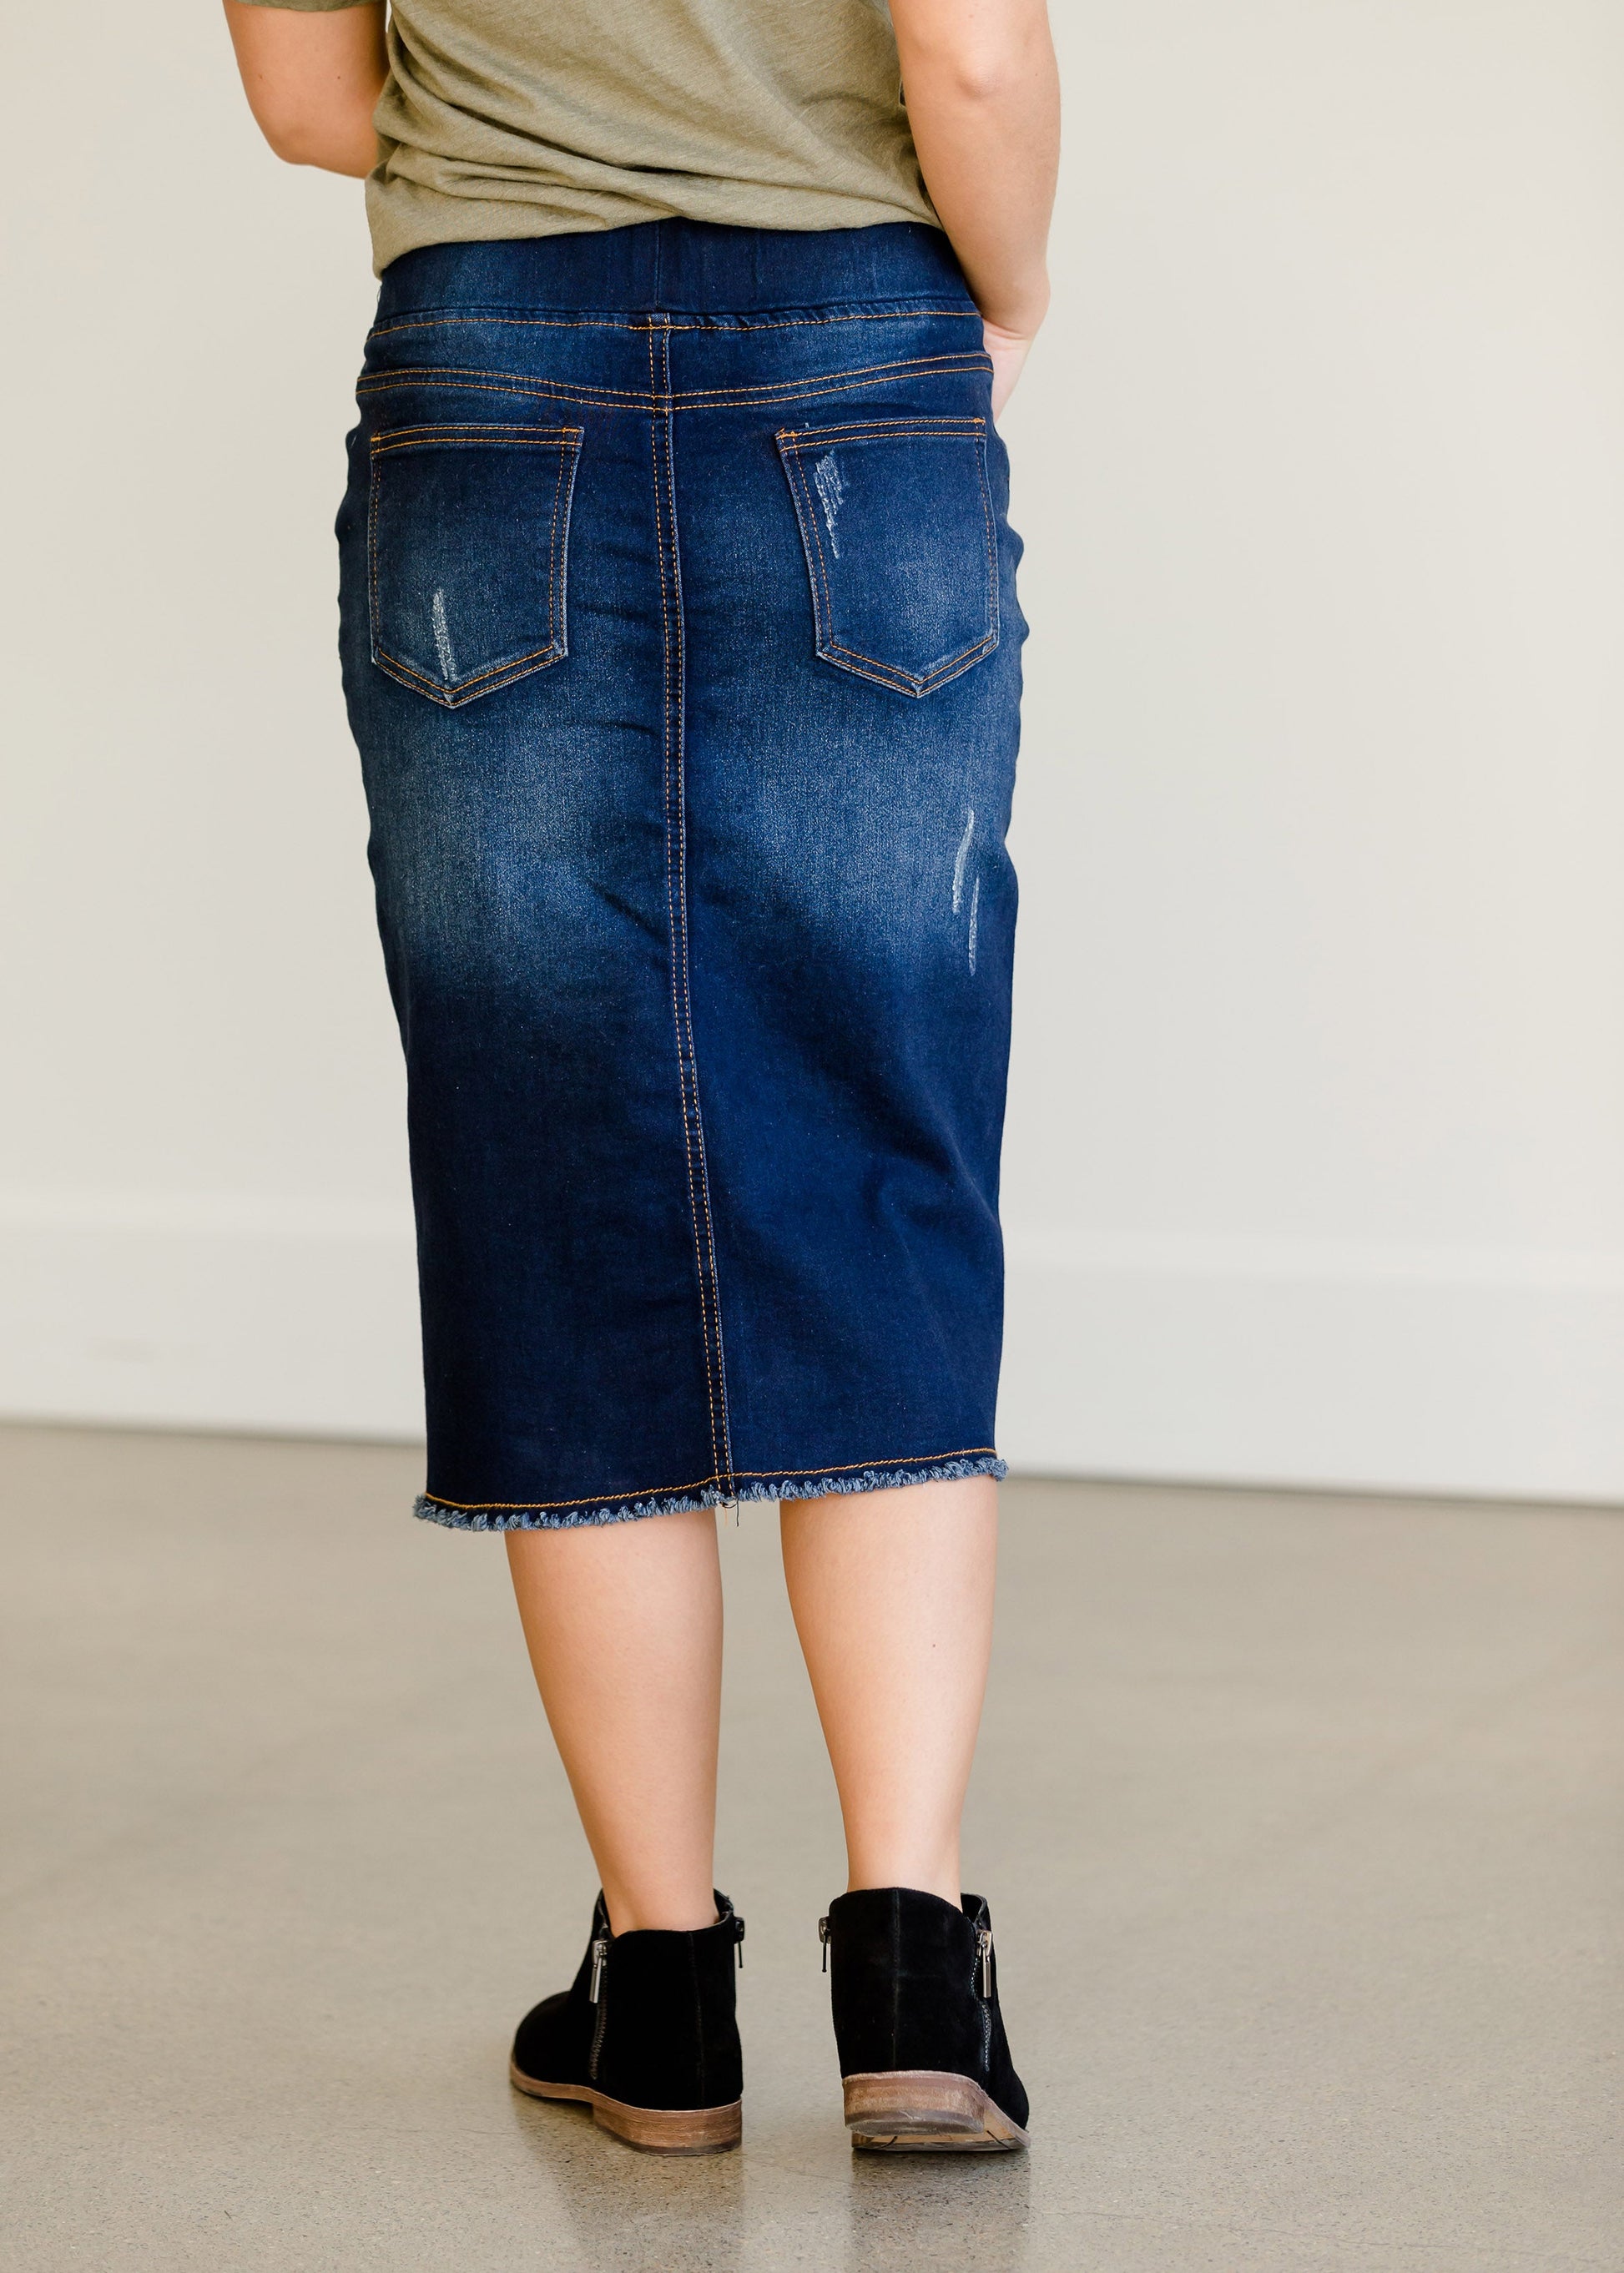 Distressed Stretch Waist Denim Skirt - FINAL SALE Skirts